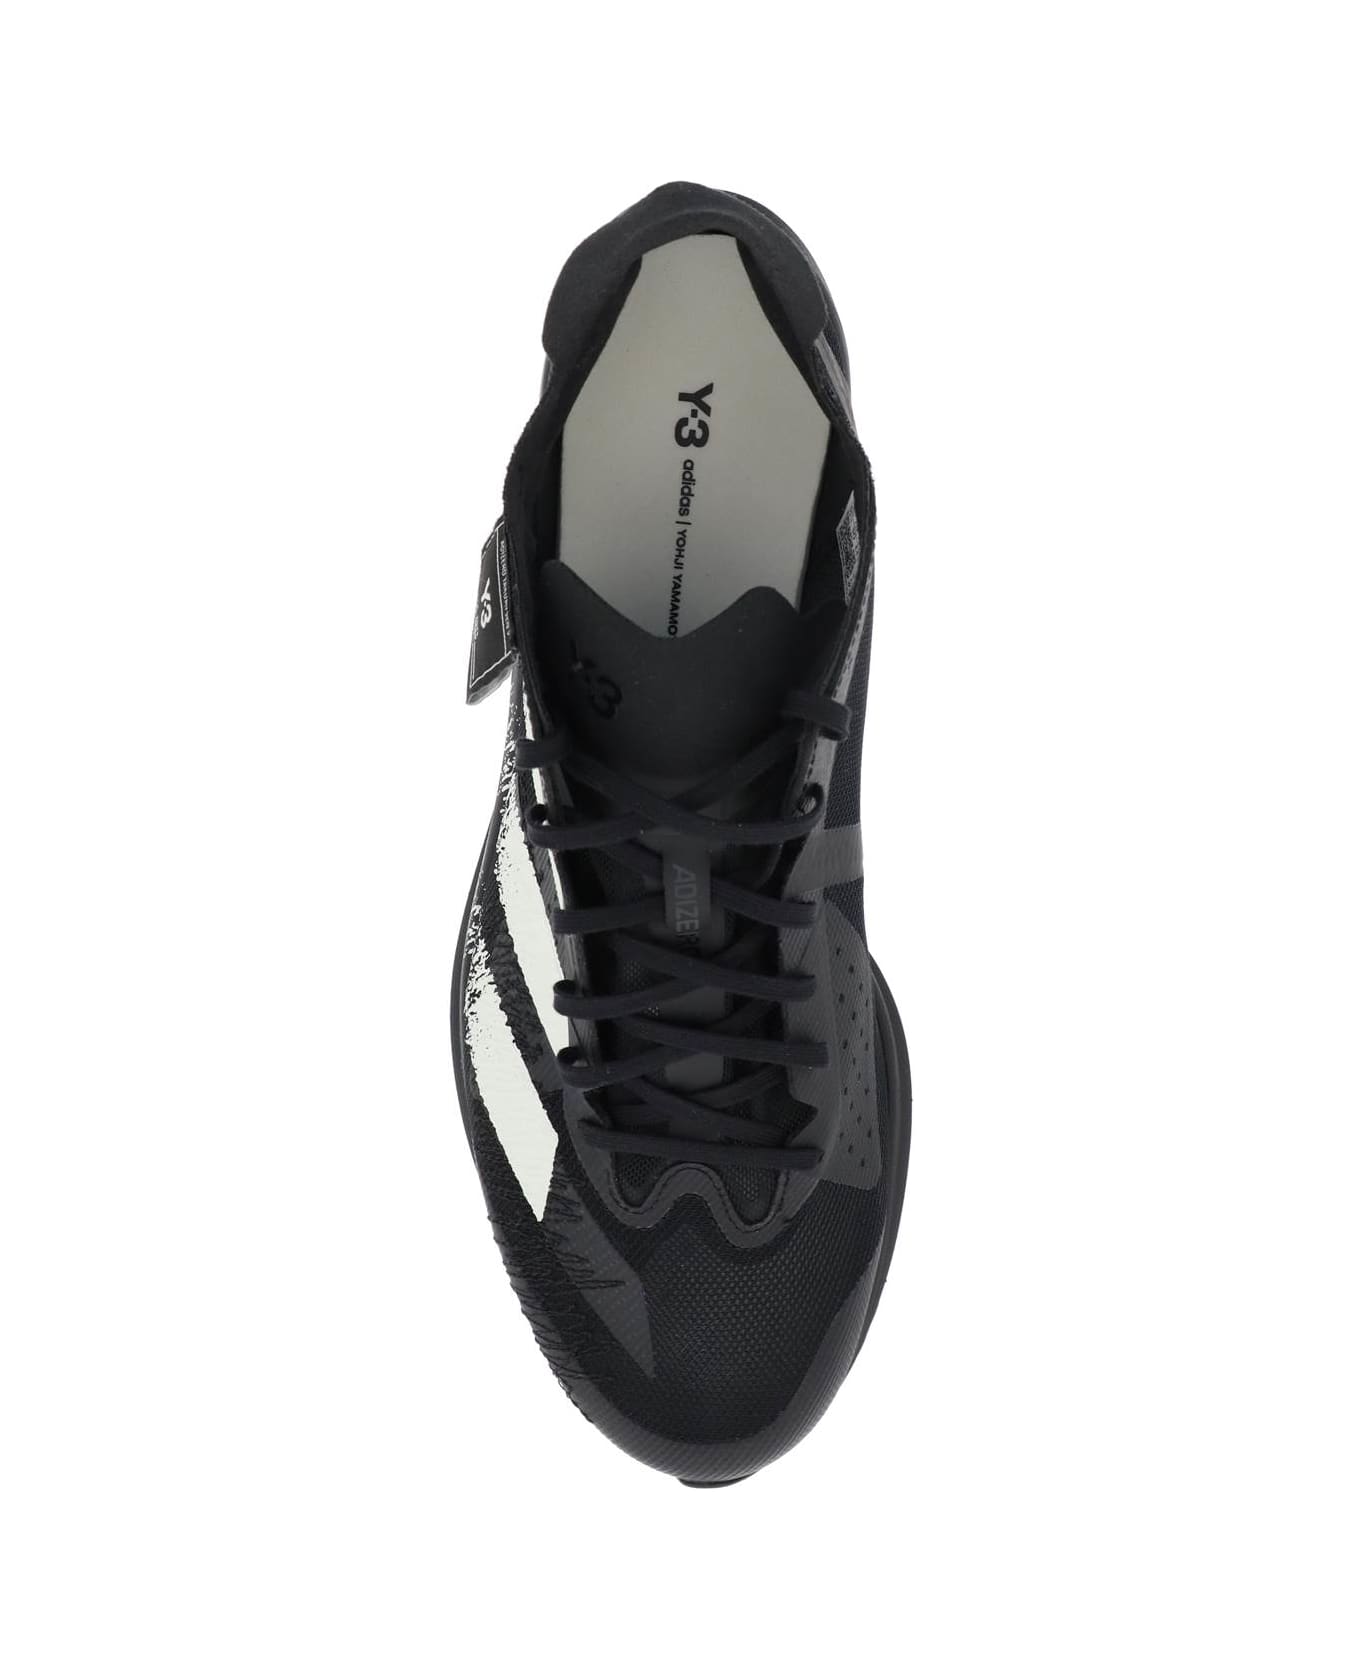 Y-3 'takumi Sen 9' Sneakers - Black Black Multi